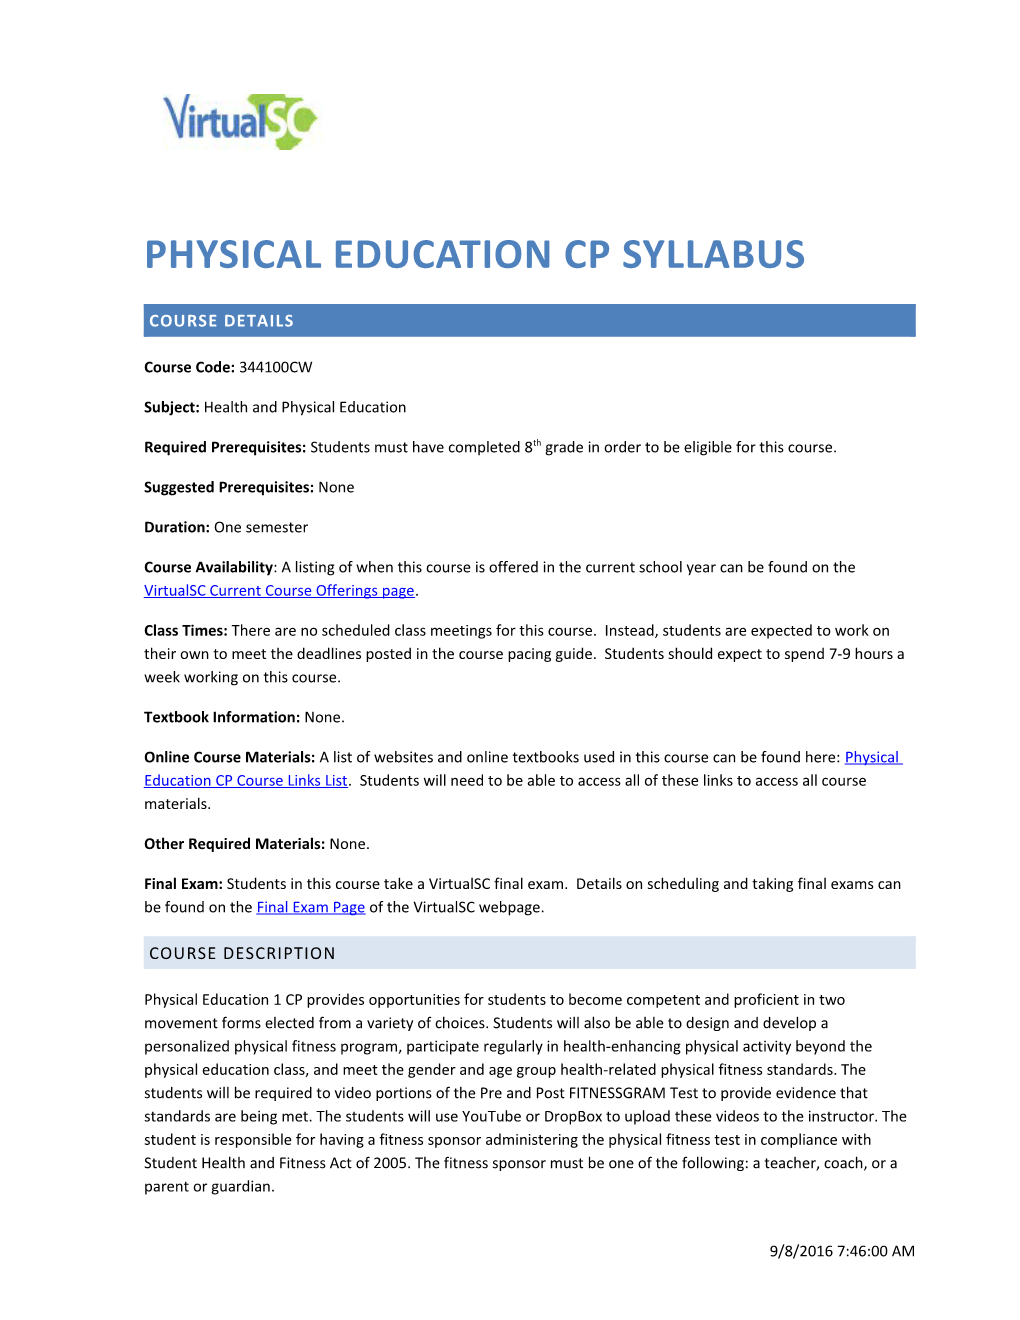 Physical Education CP Syllabus